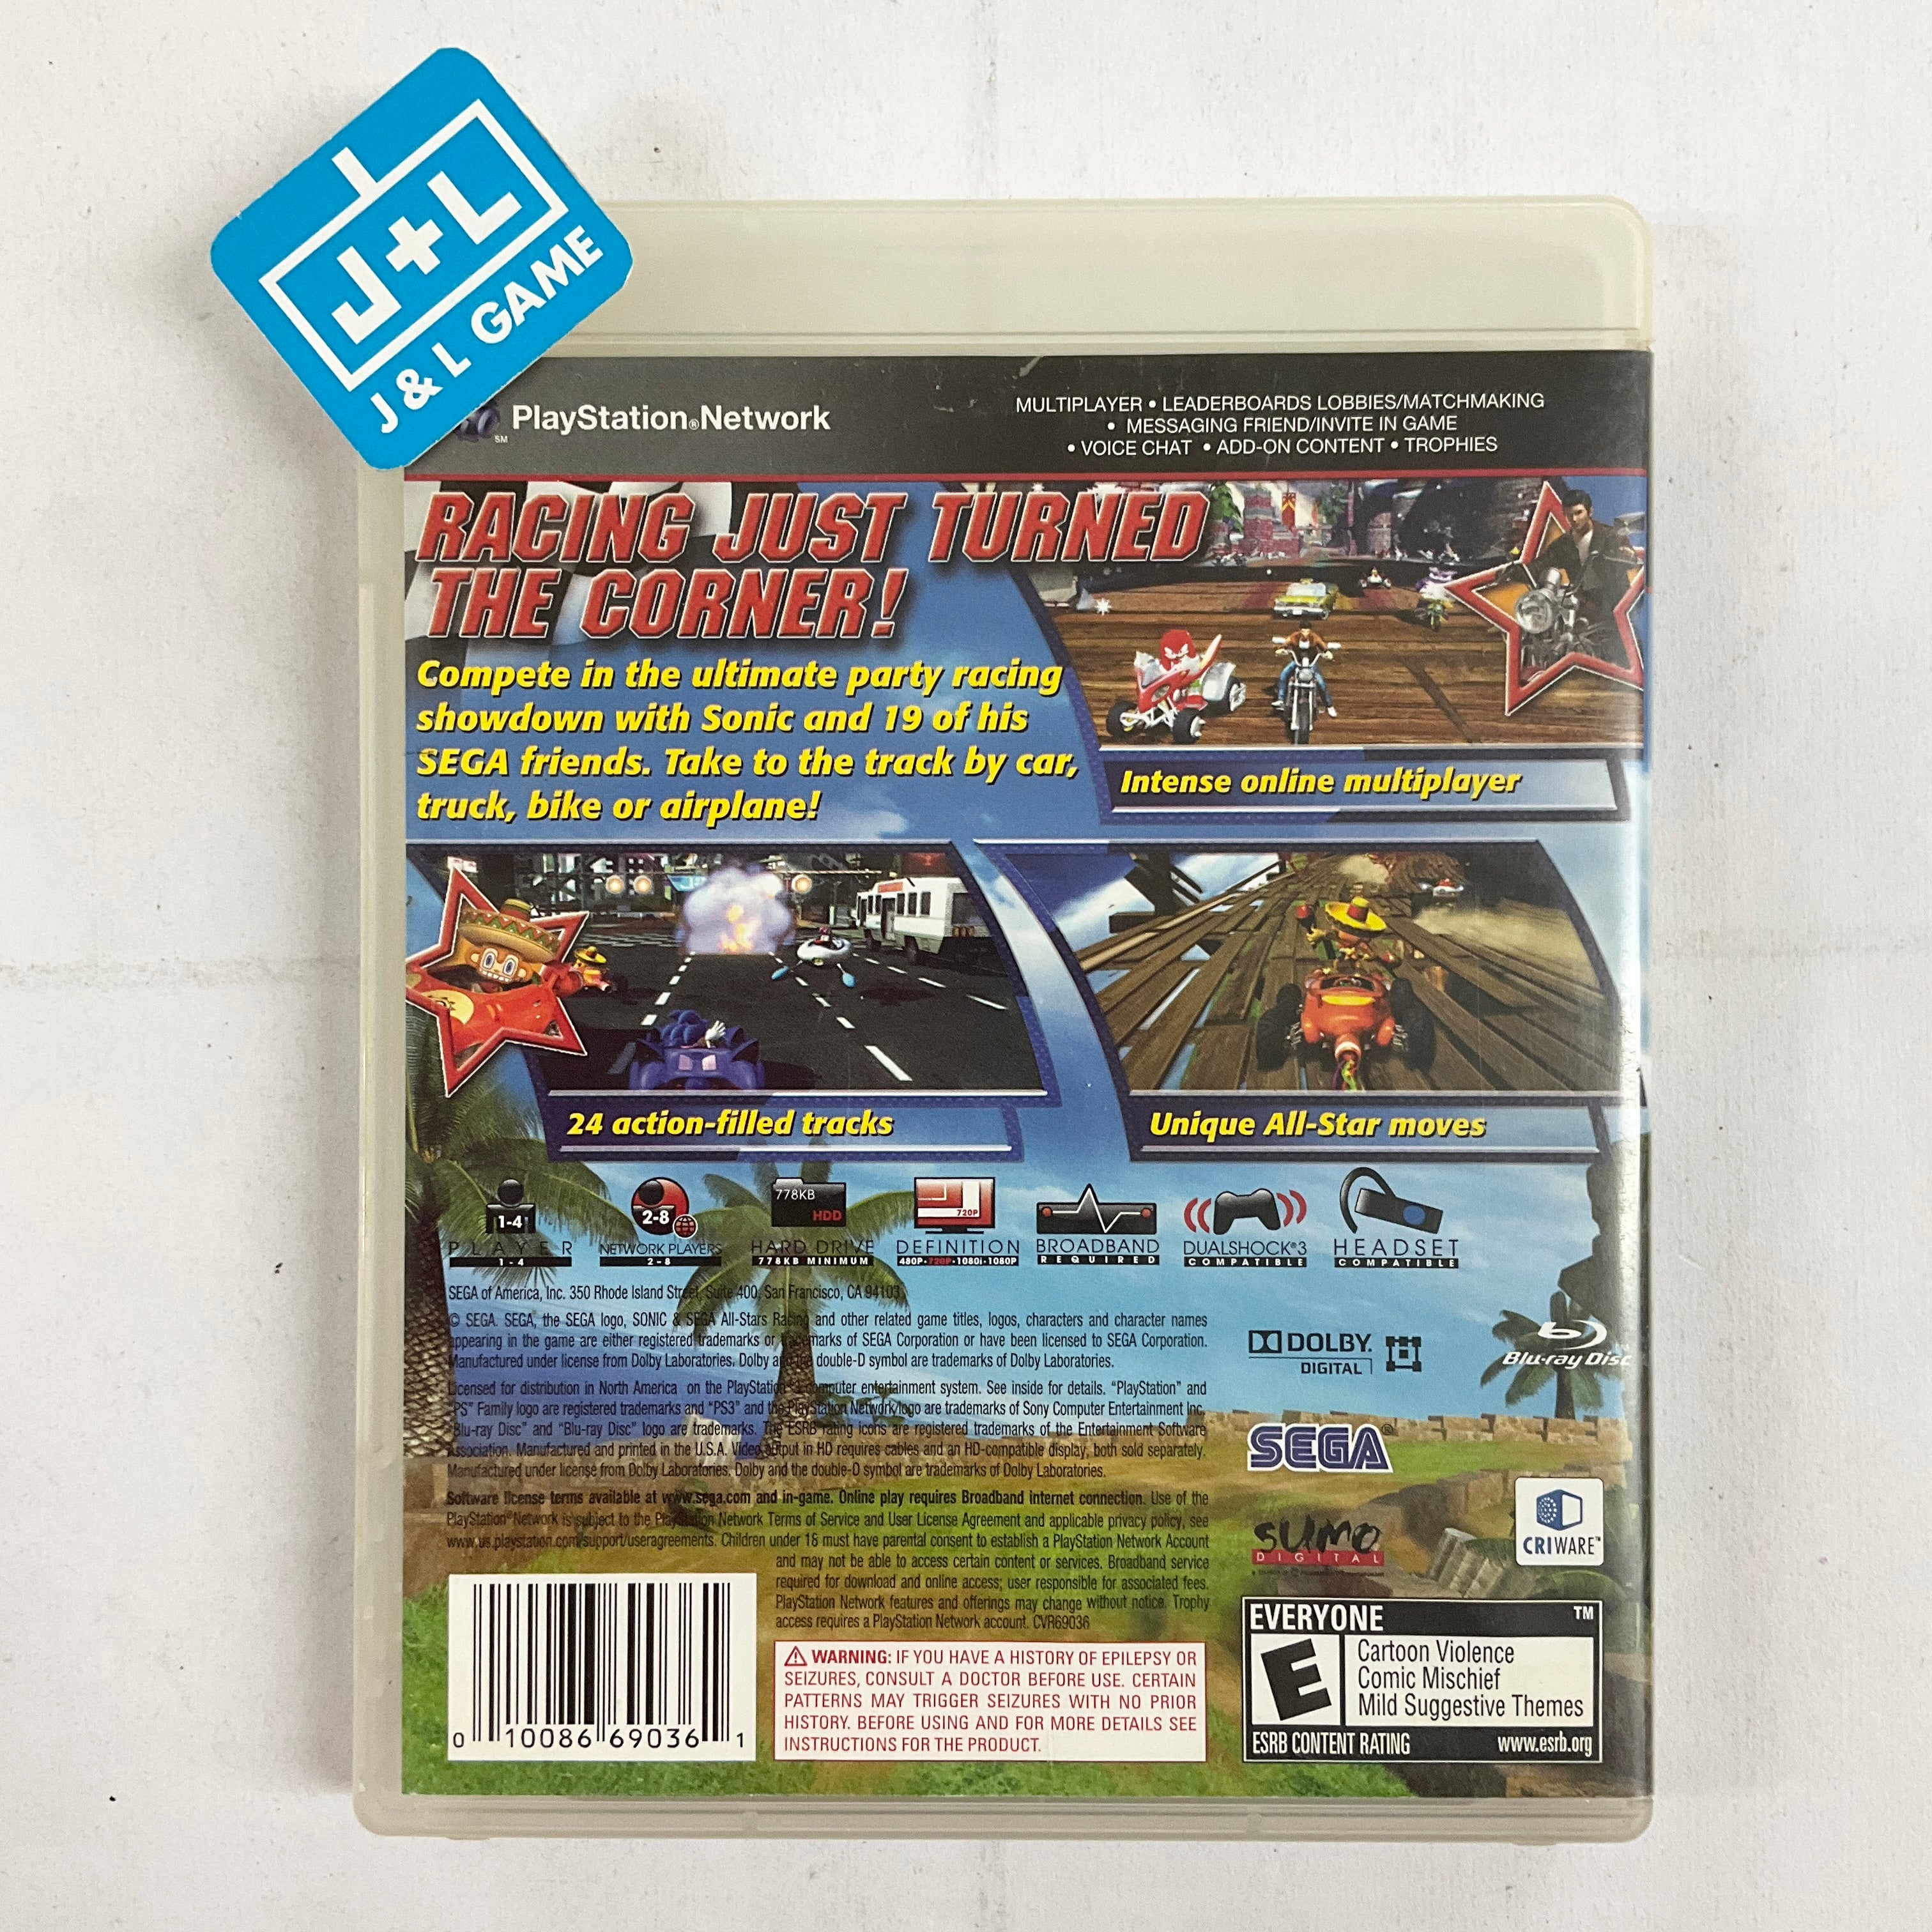 Sonic & SEGA All-Stars Racing - (PS3) PlayStation 3 [Pre-Owned] Video Games SEGA   